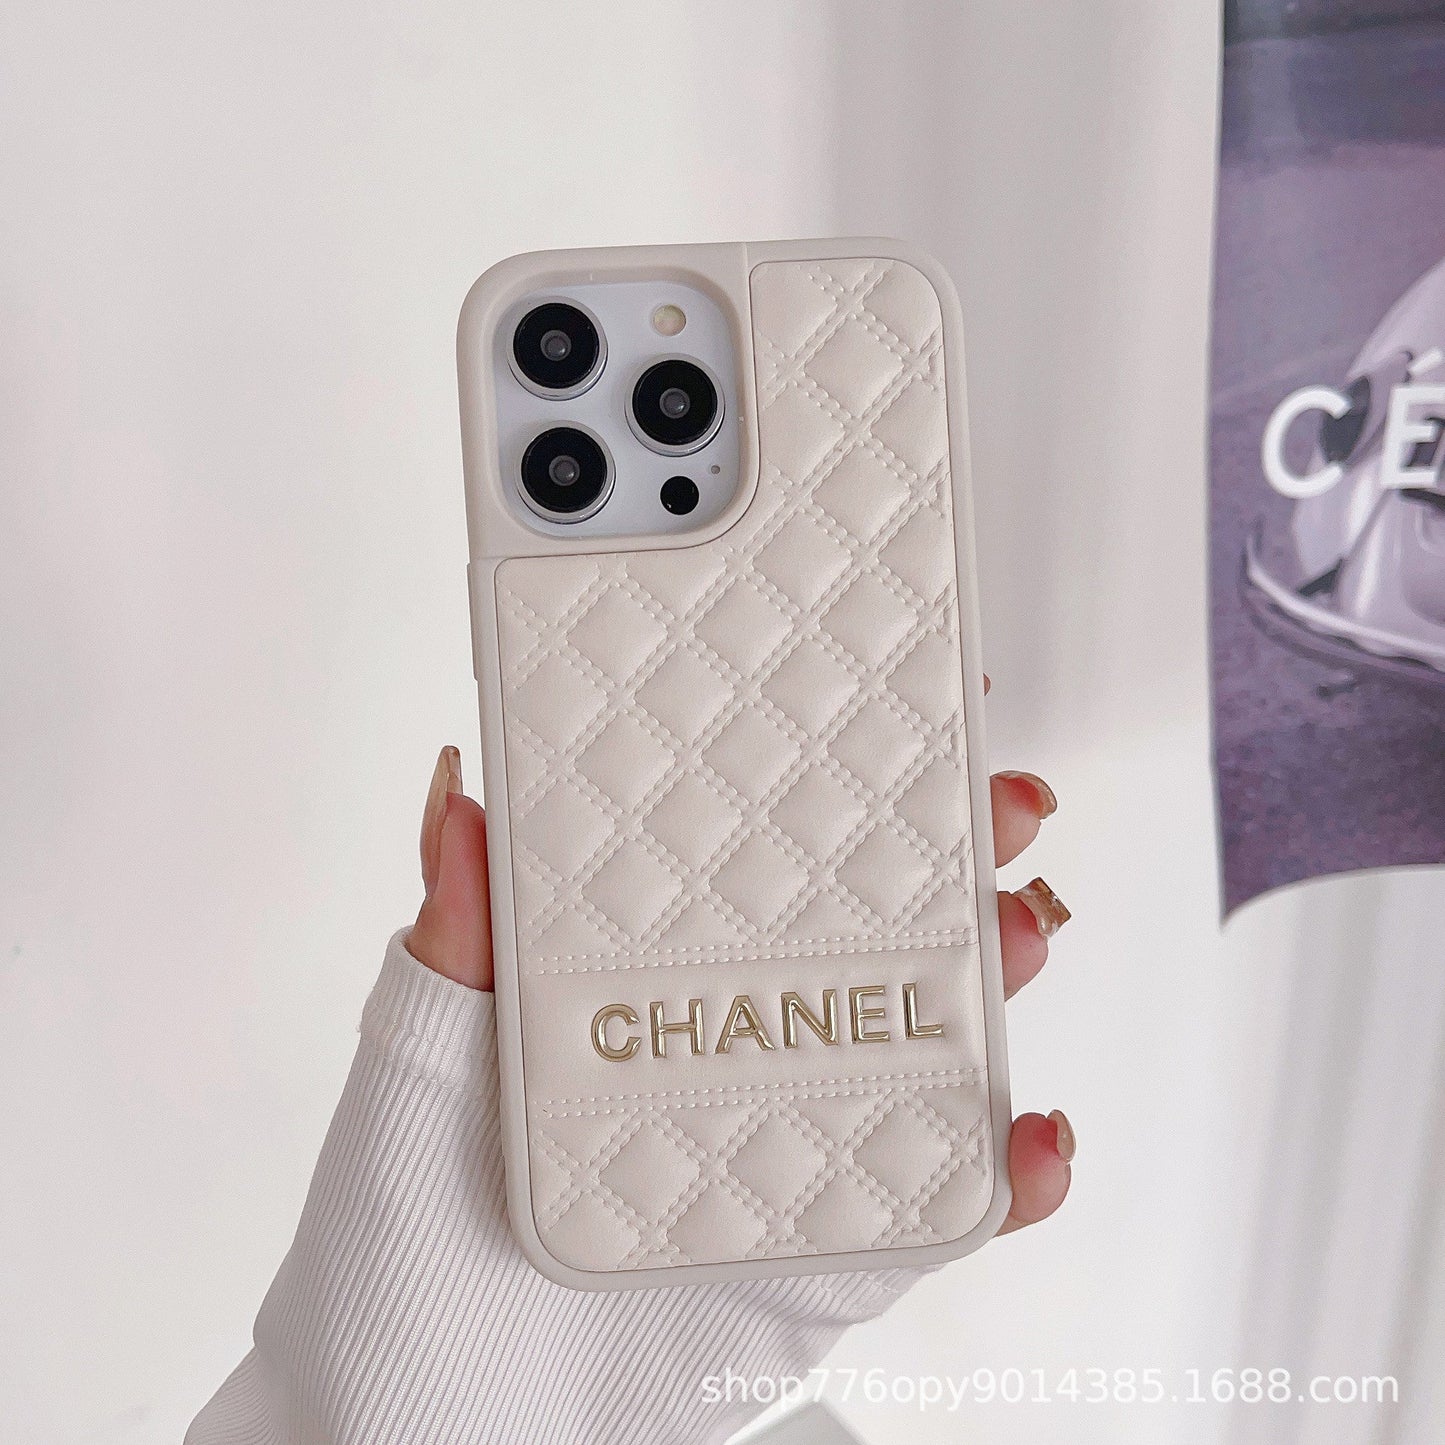 White CHANER iphone case